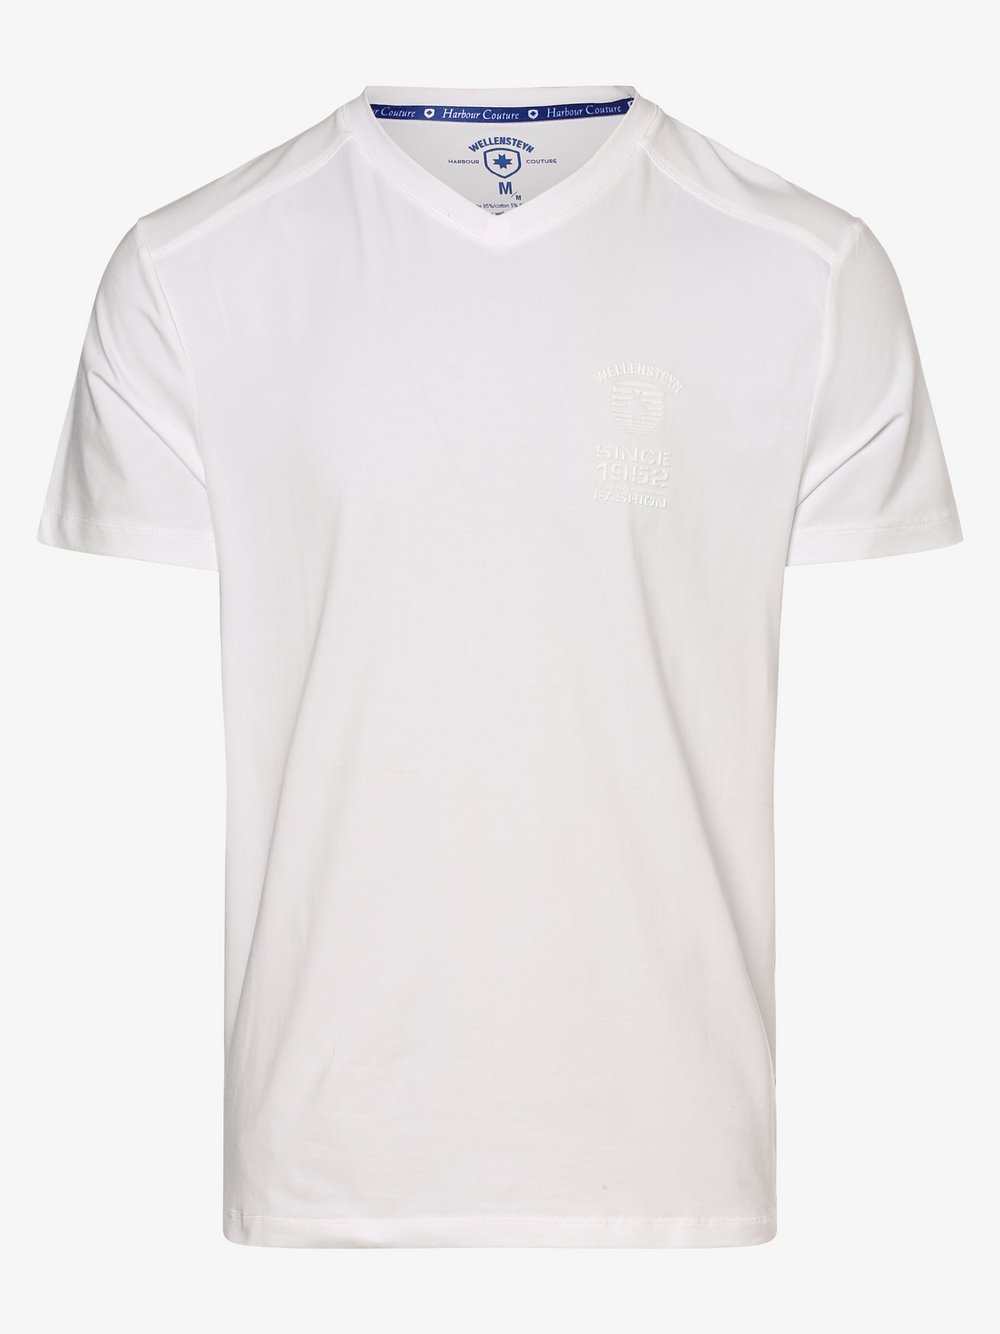 Wellensteyn - T-shirt męski, biały